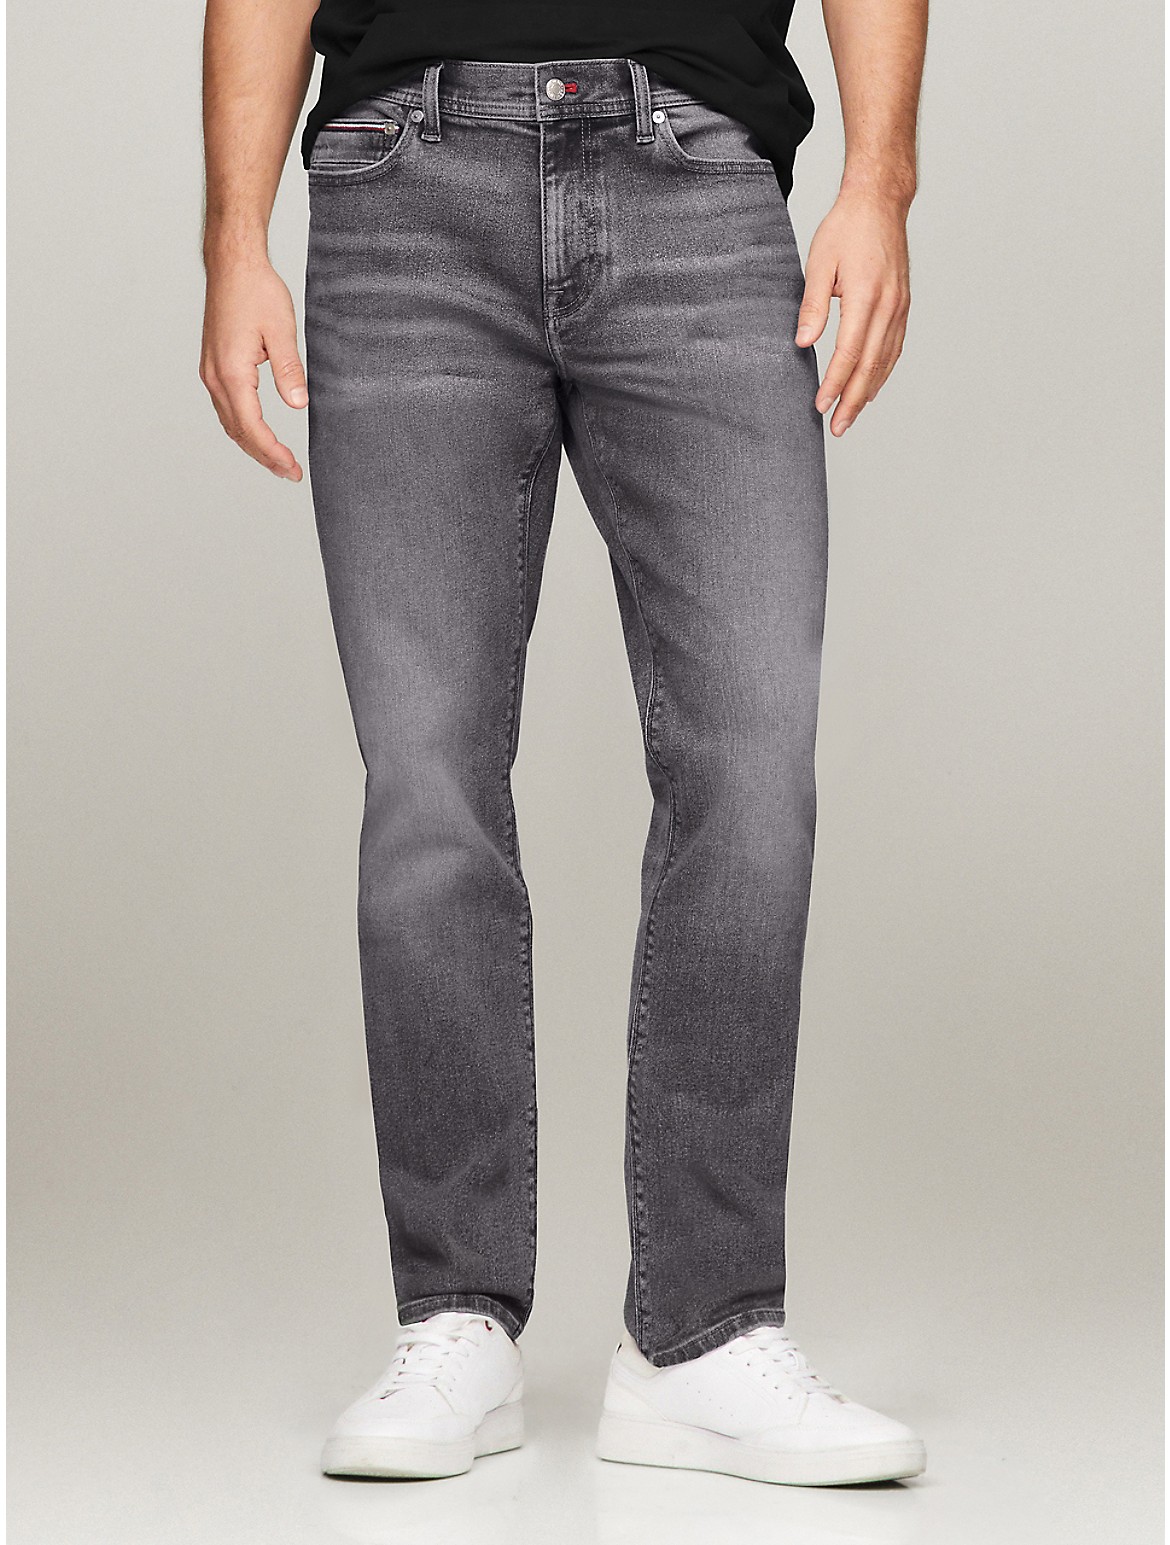 Tommy Hilfiger Men's Straight Fit Dark Gray Jean